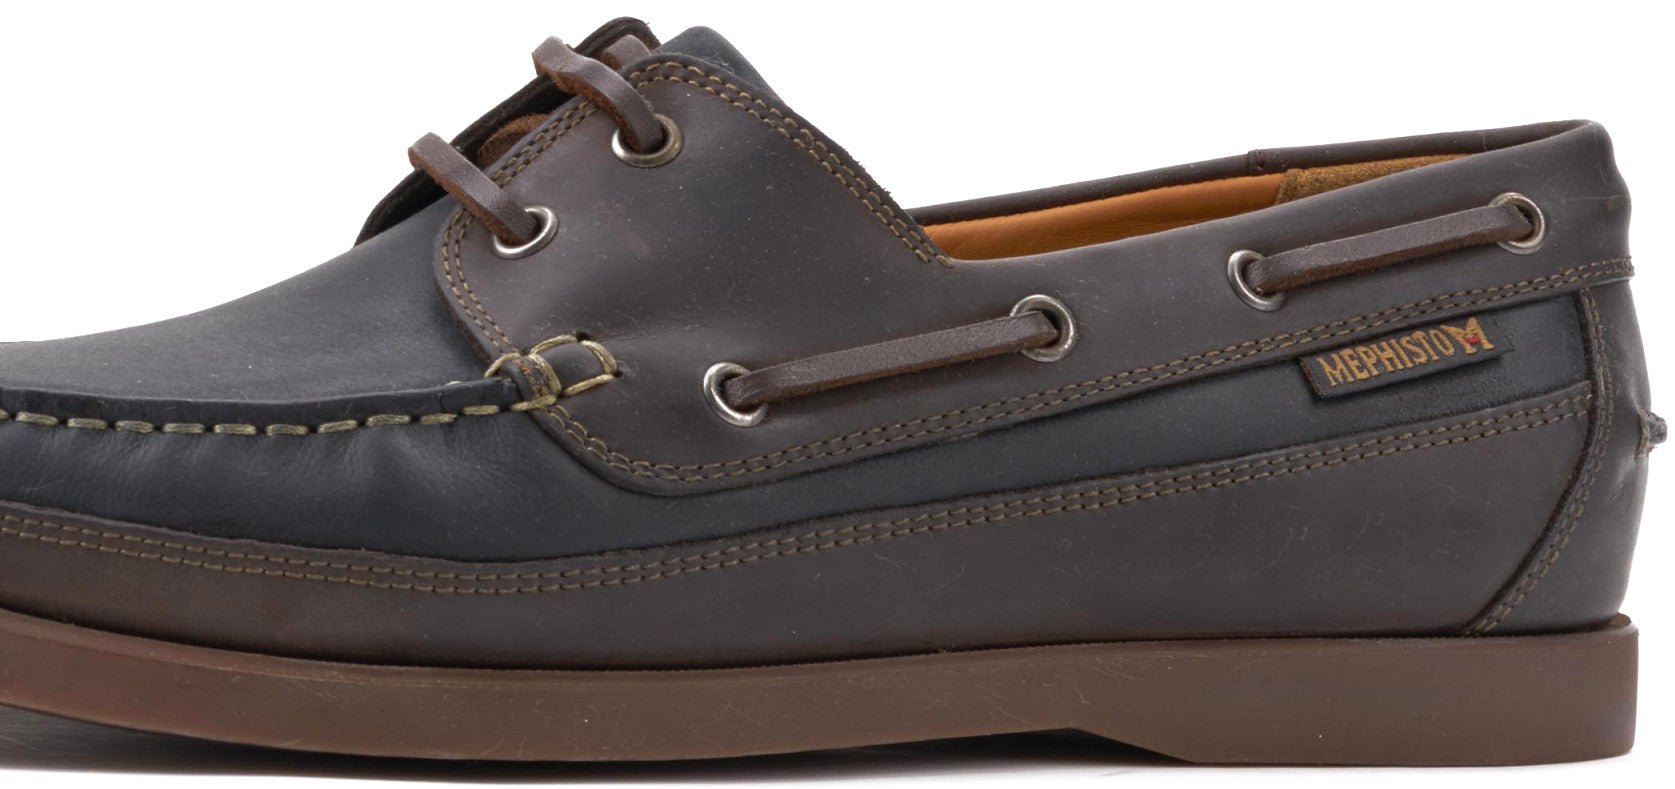 'Boating' men's boat shoes - Black - Chaplinshoes'Boating' men's boat shoes - BlackMephisto